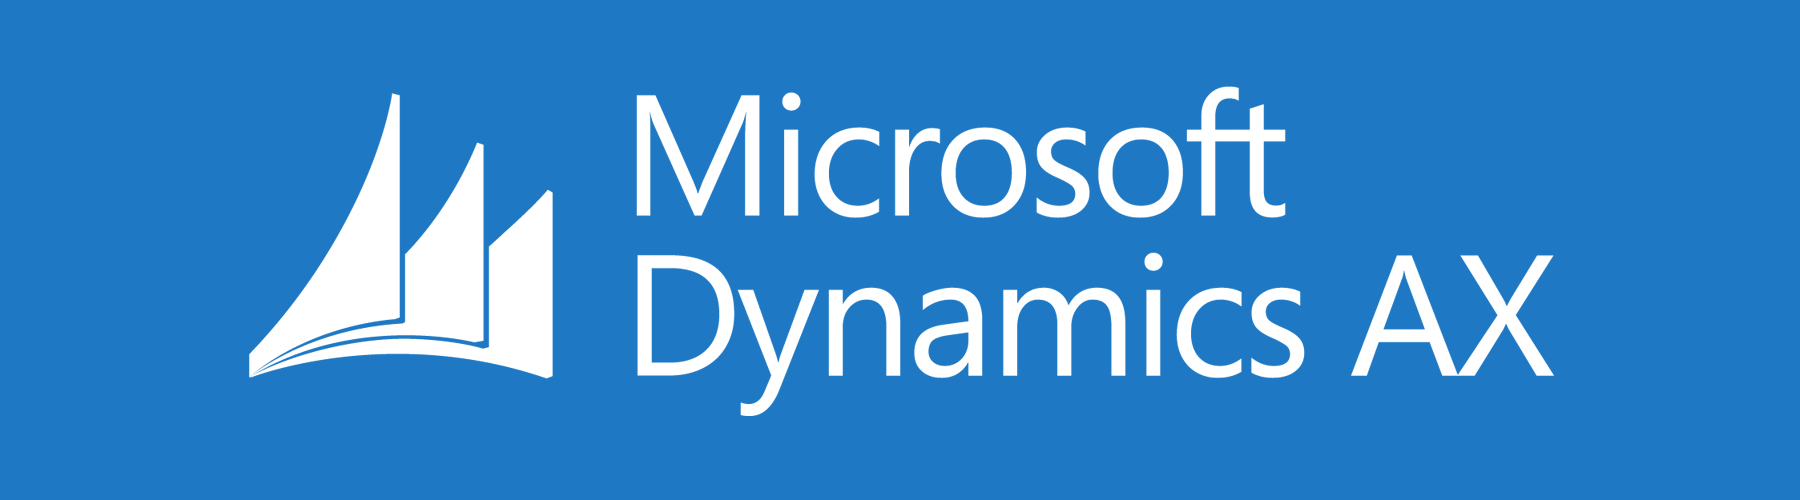 Microsoft Dynamics Logo - Where can I find Dynamics AX logo Please? - Microsoft Dynamics AX ...